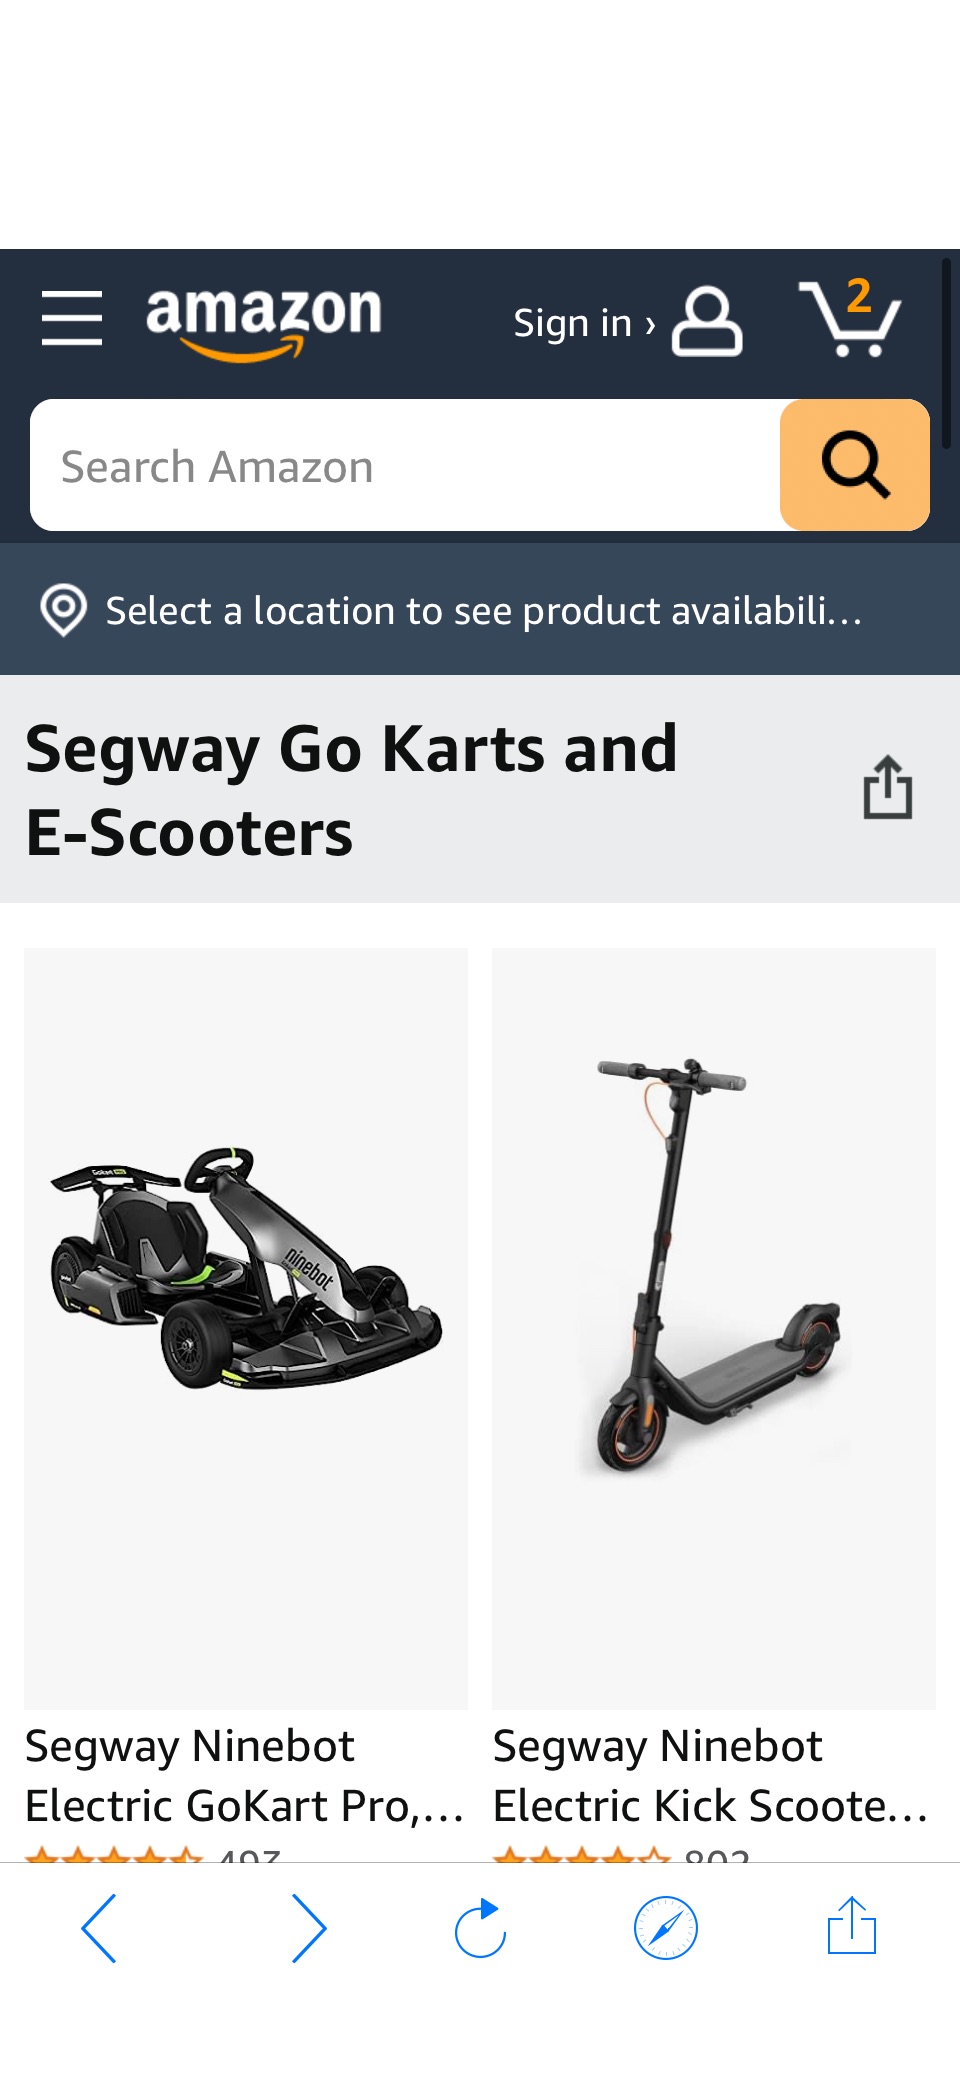 Segway Go Karts and E-Scooters促销179.99起